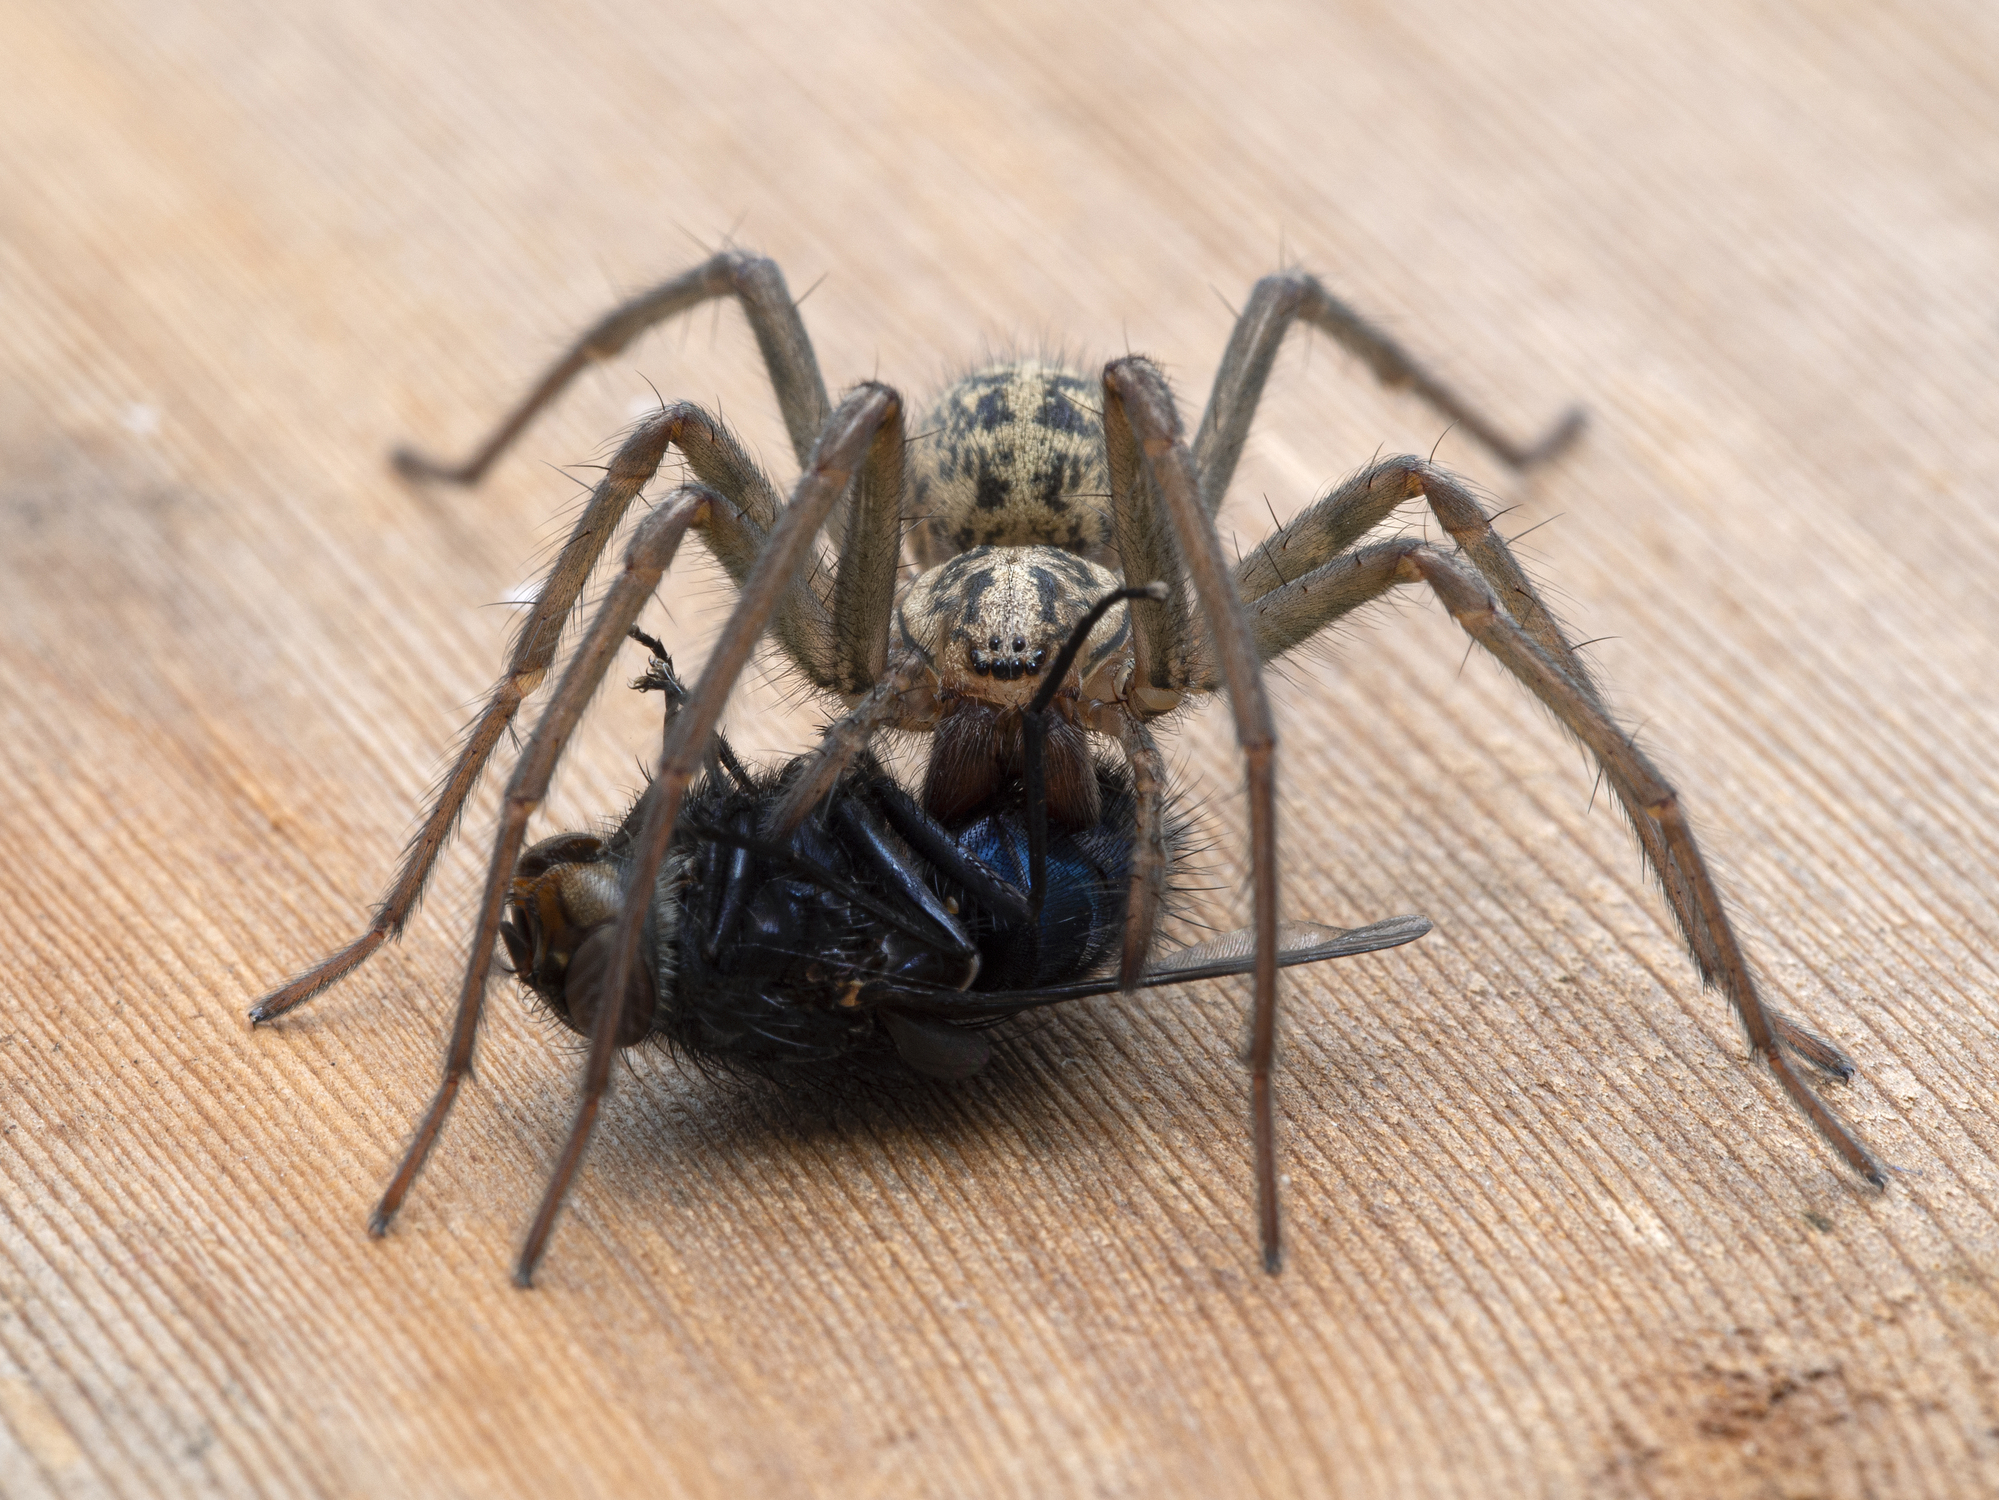 Female giant house spider (Eratigena duellica) feeding